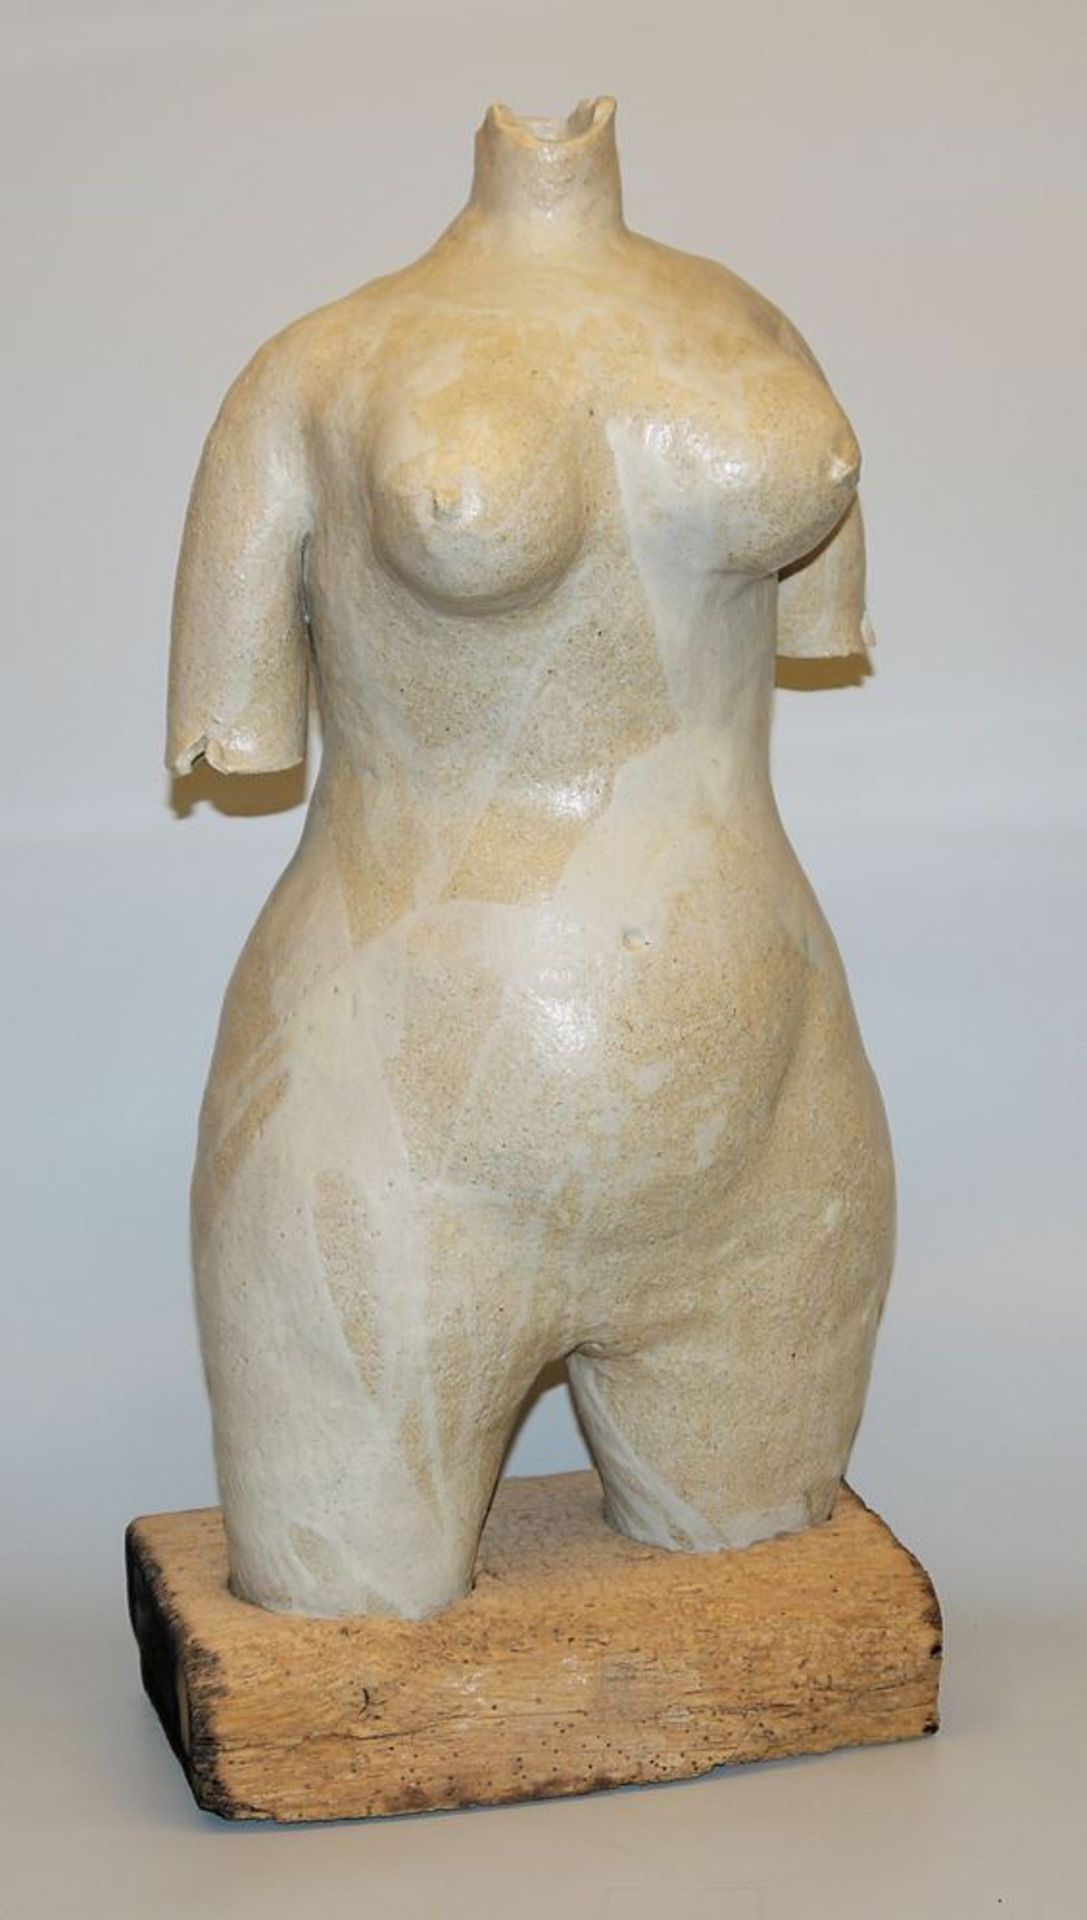 Maike Orlob-Rothweiler, large ceramic sculpture "Torso" around 1985